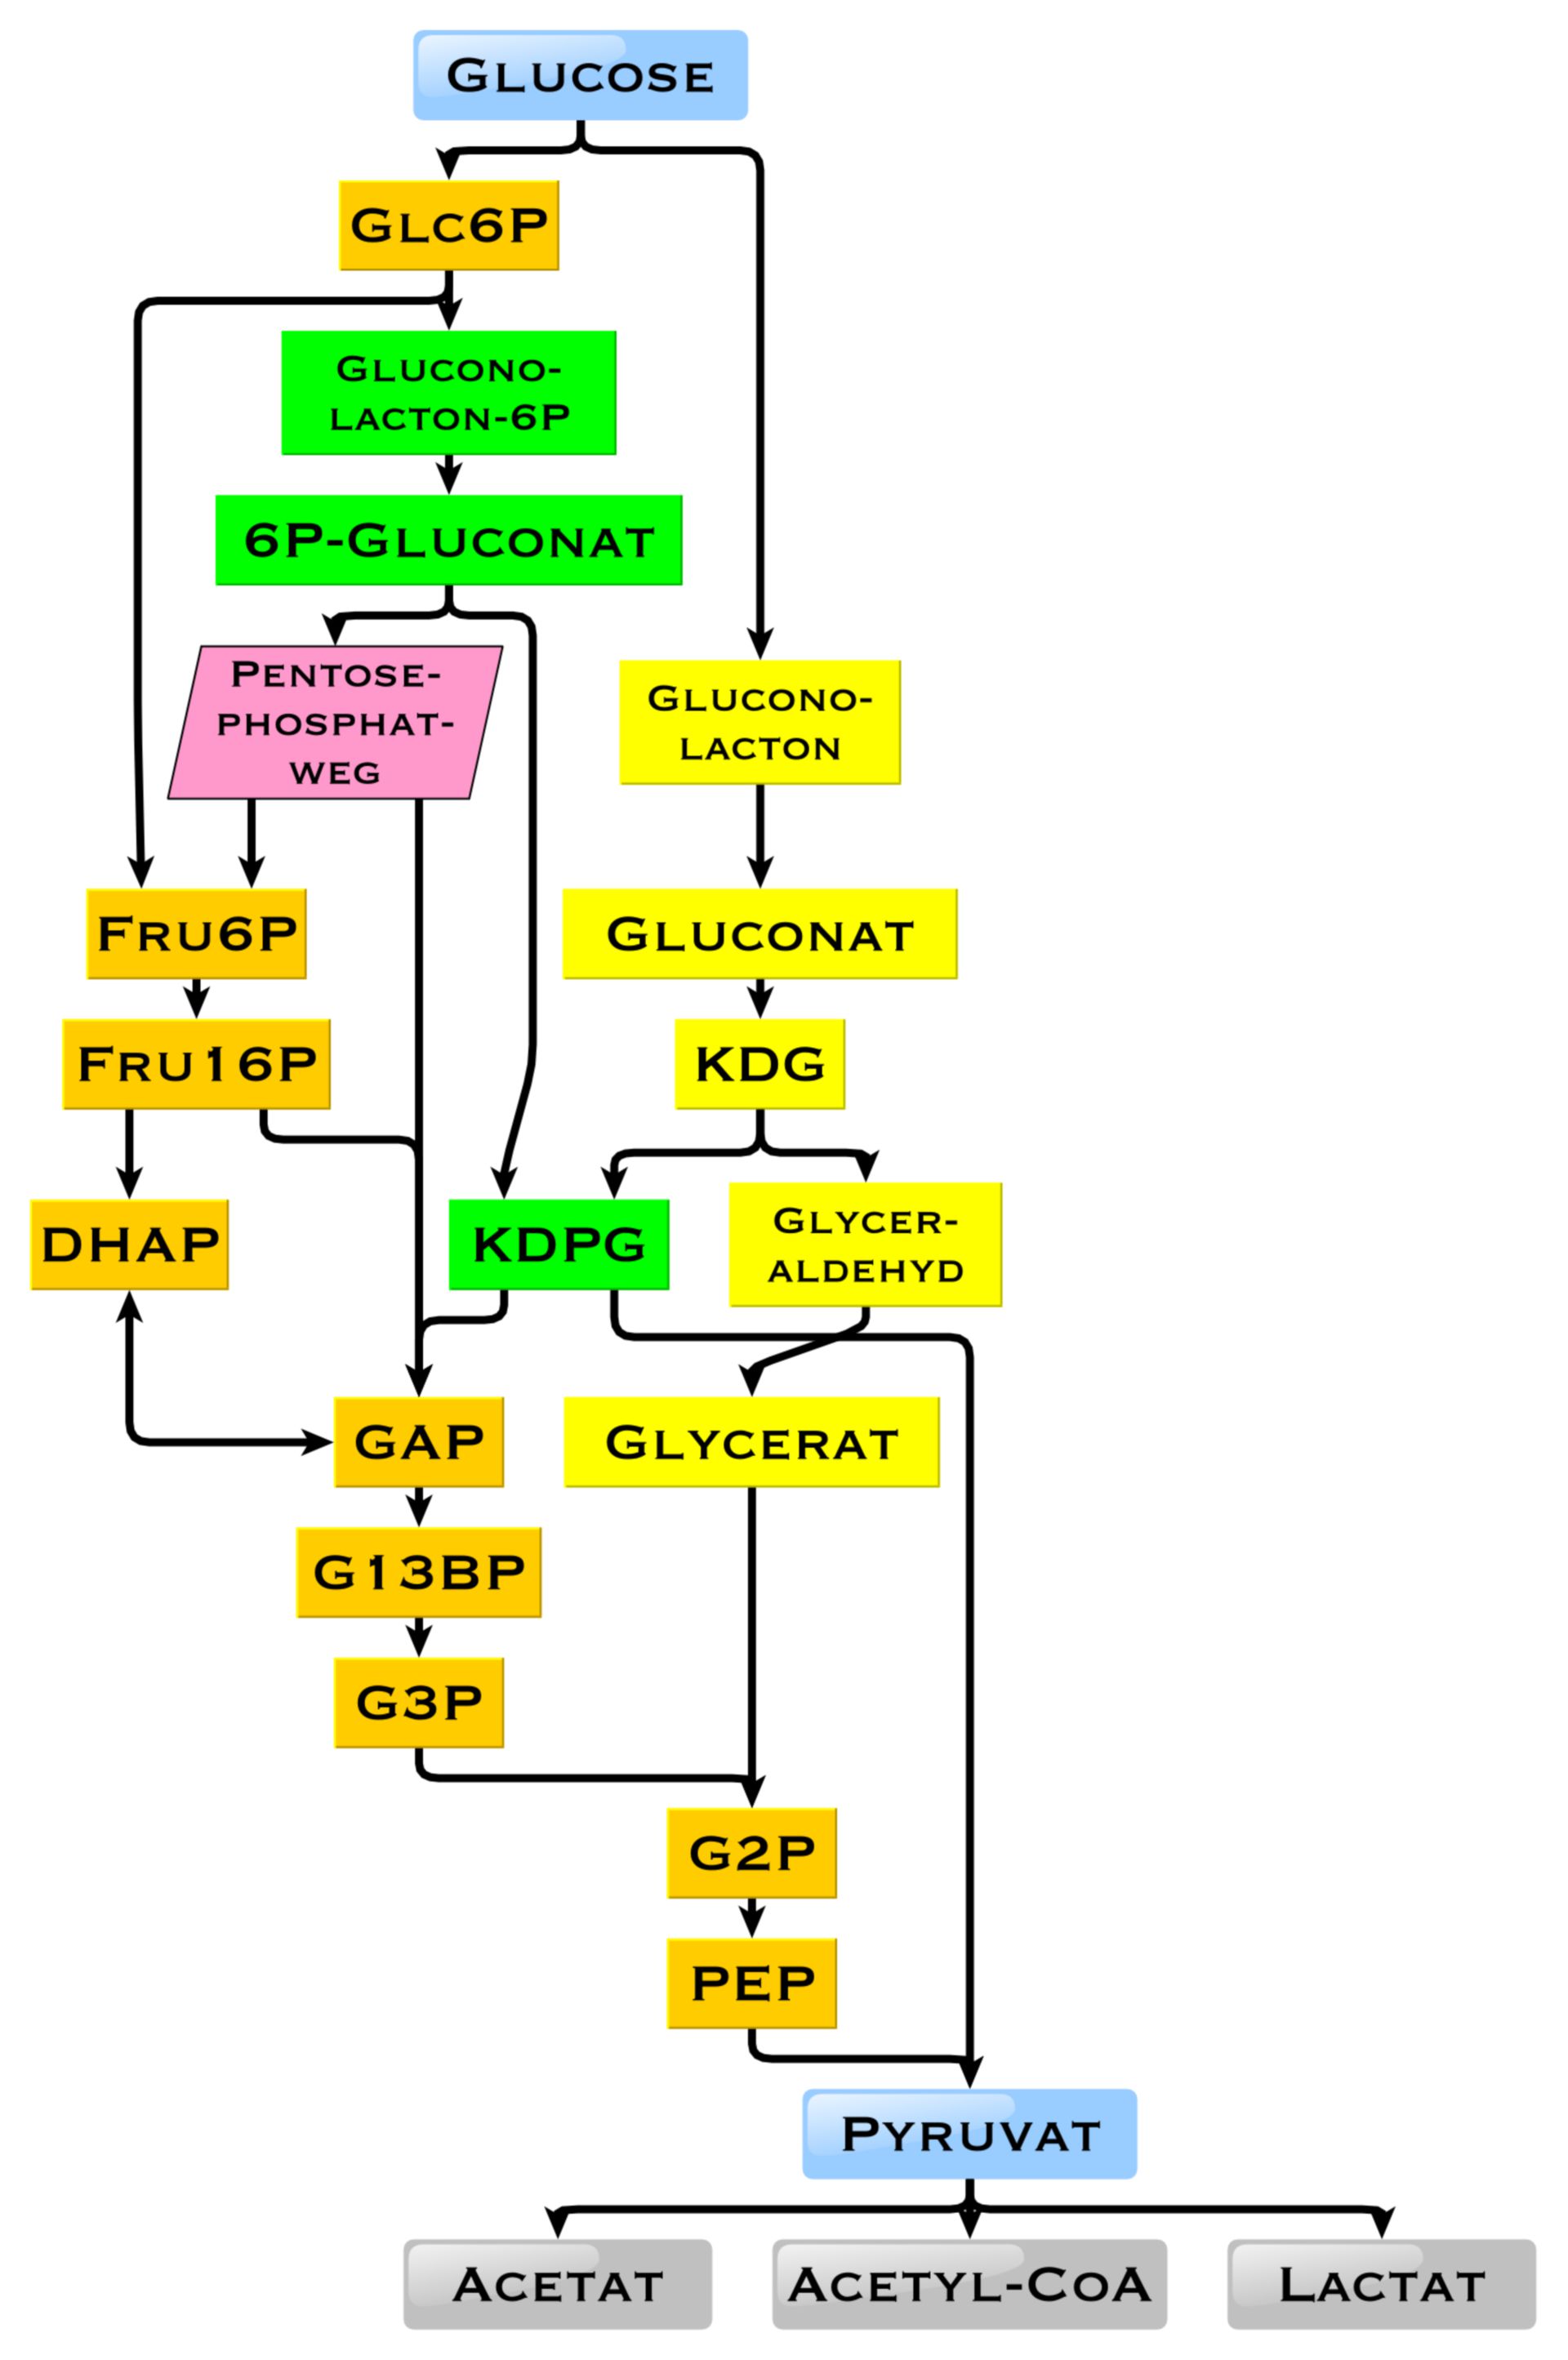 Intermediates in glucose degradation